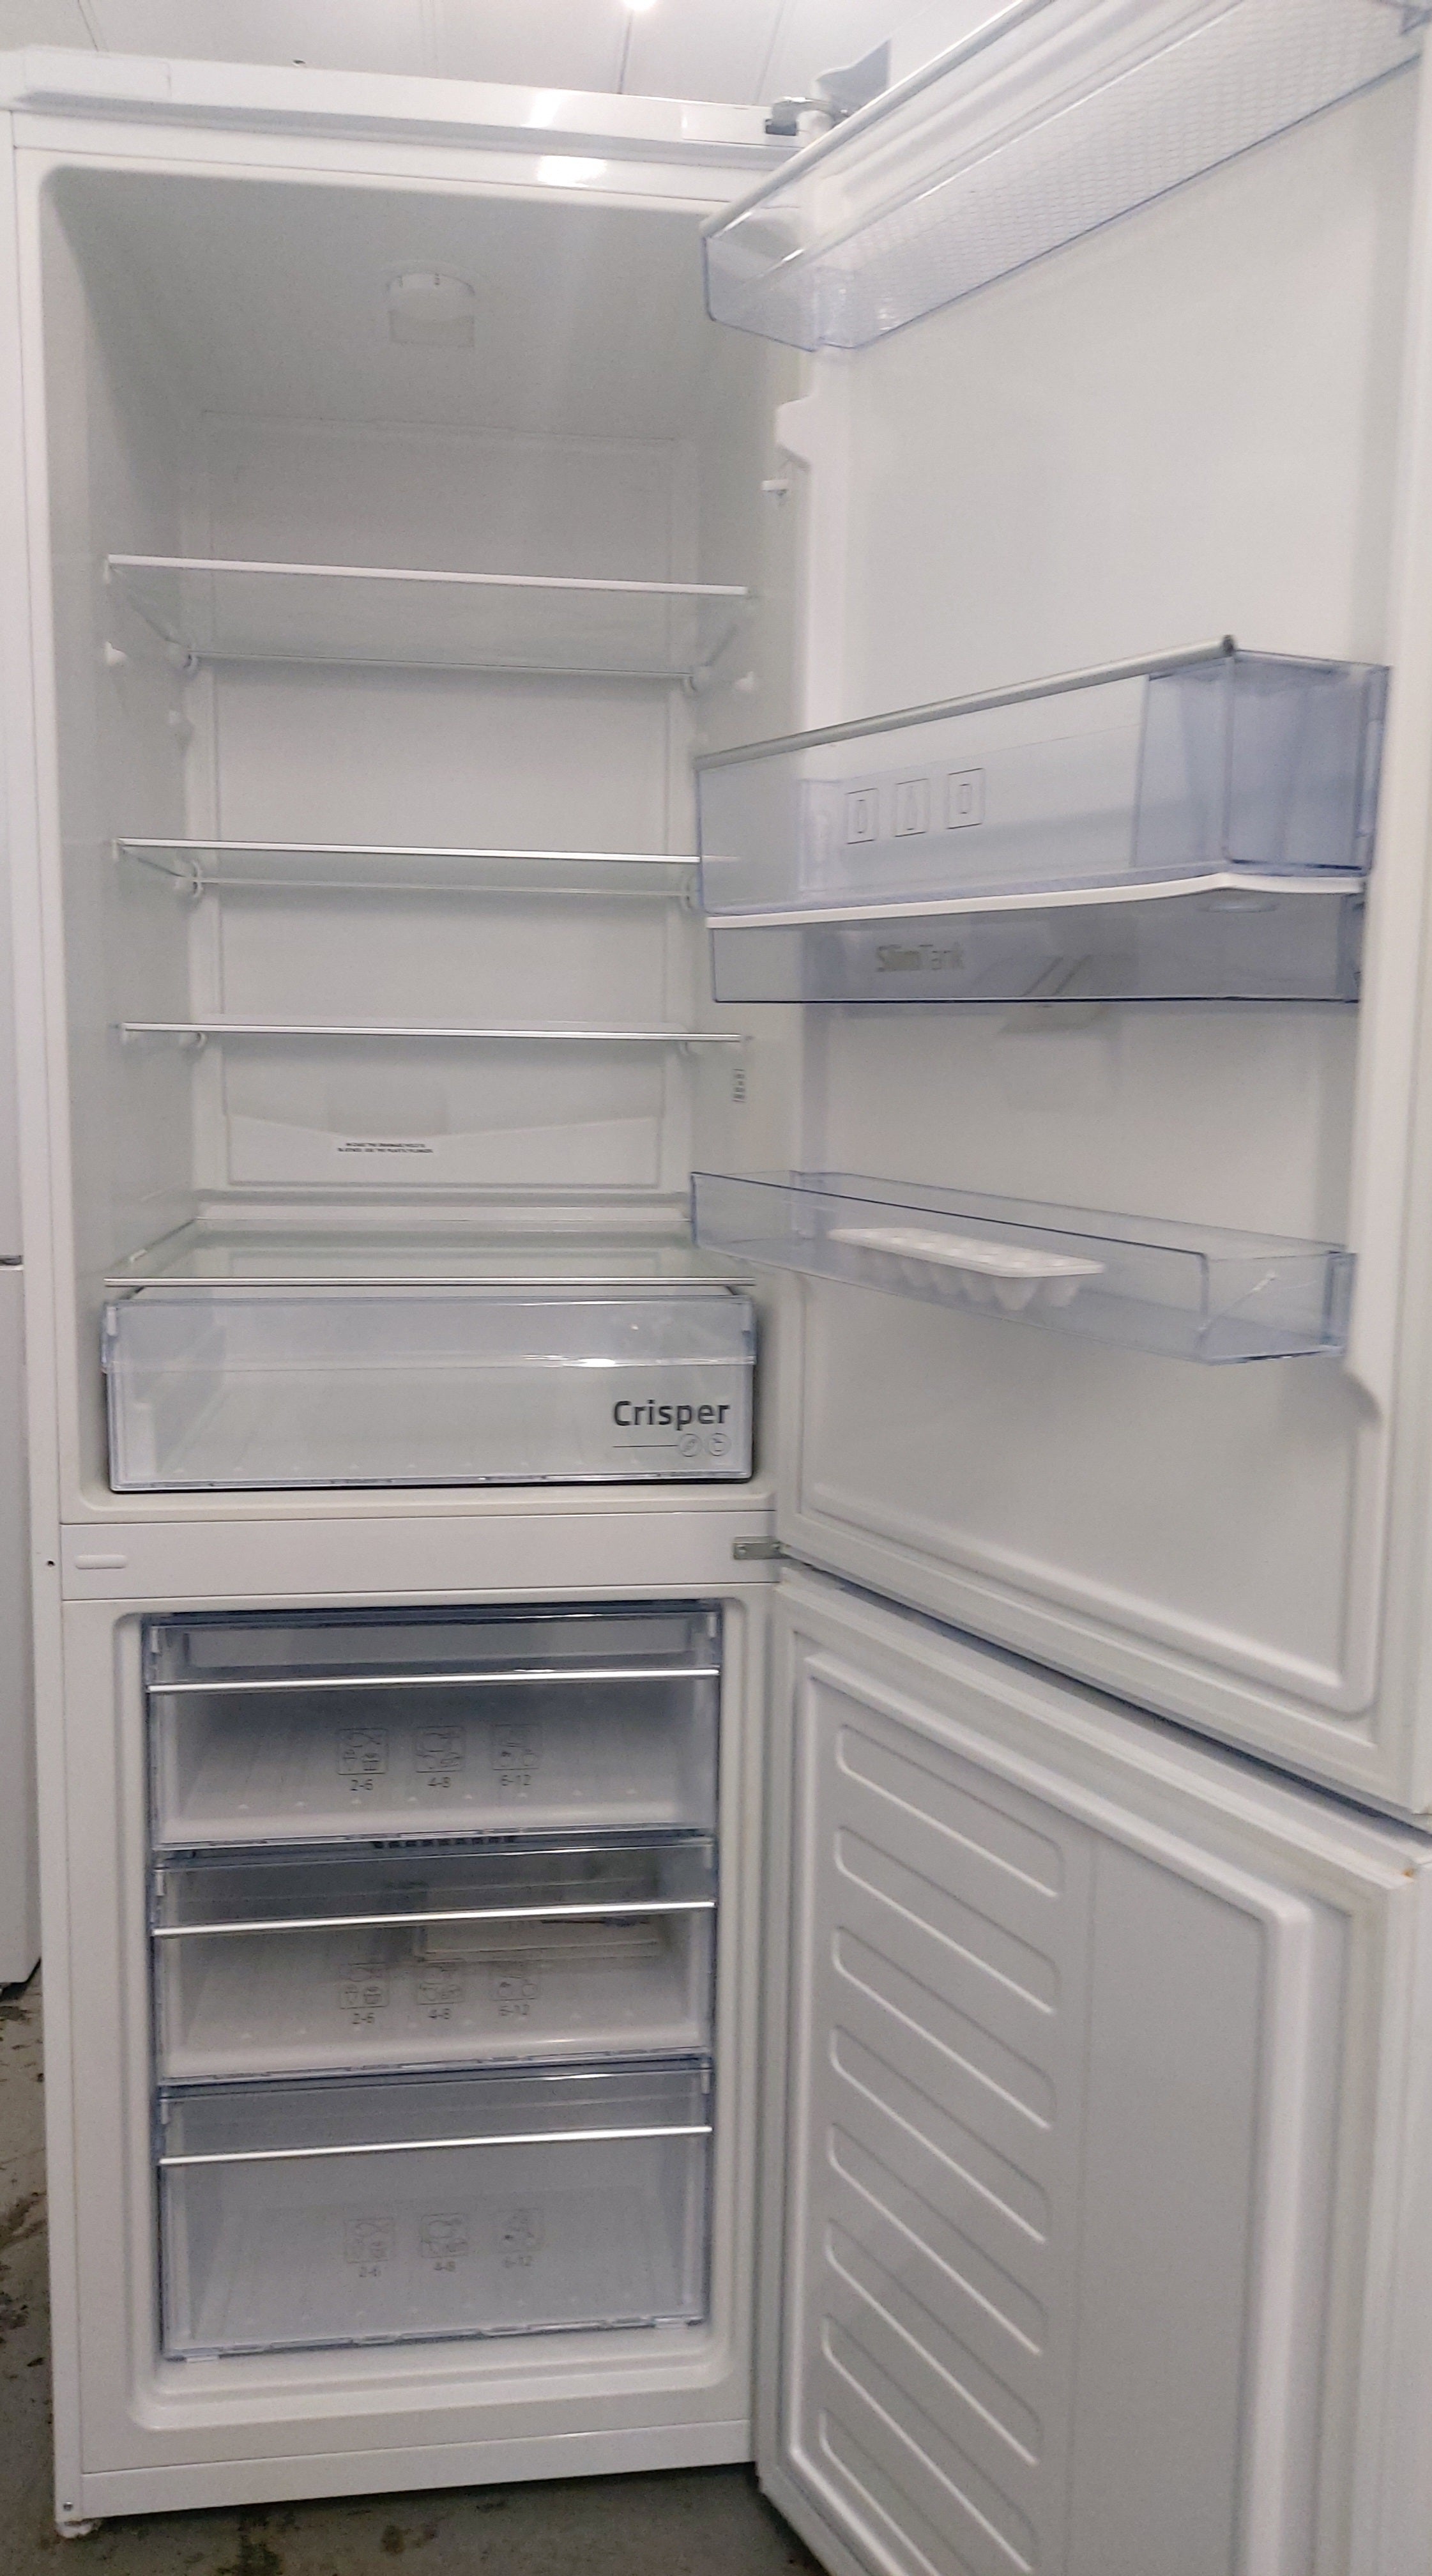 Beko CXFG1685DW Graded Fridge Freezer with Non-Plumbed Water Dispenser - Frost Free - White